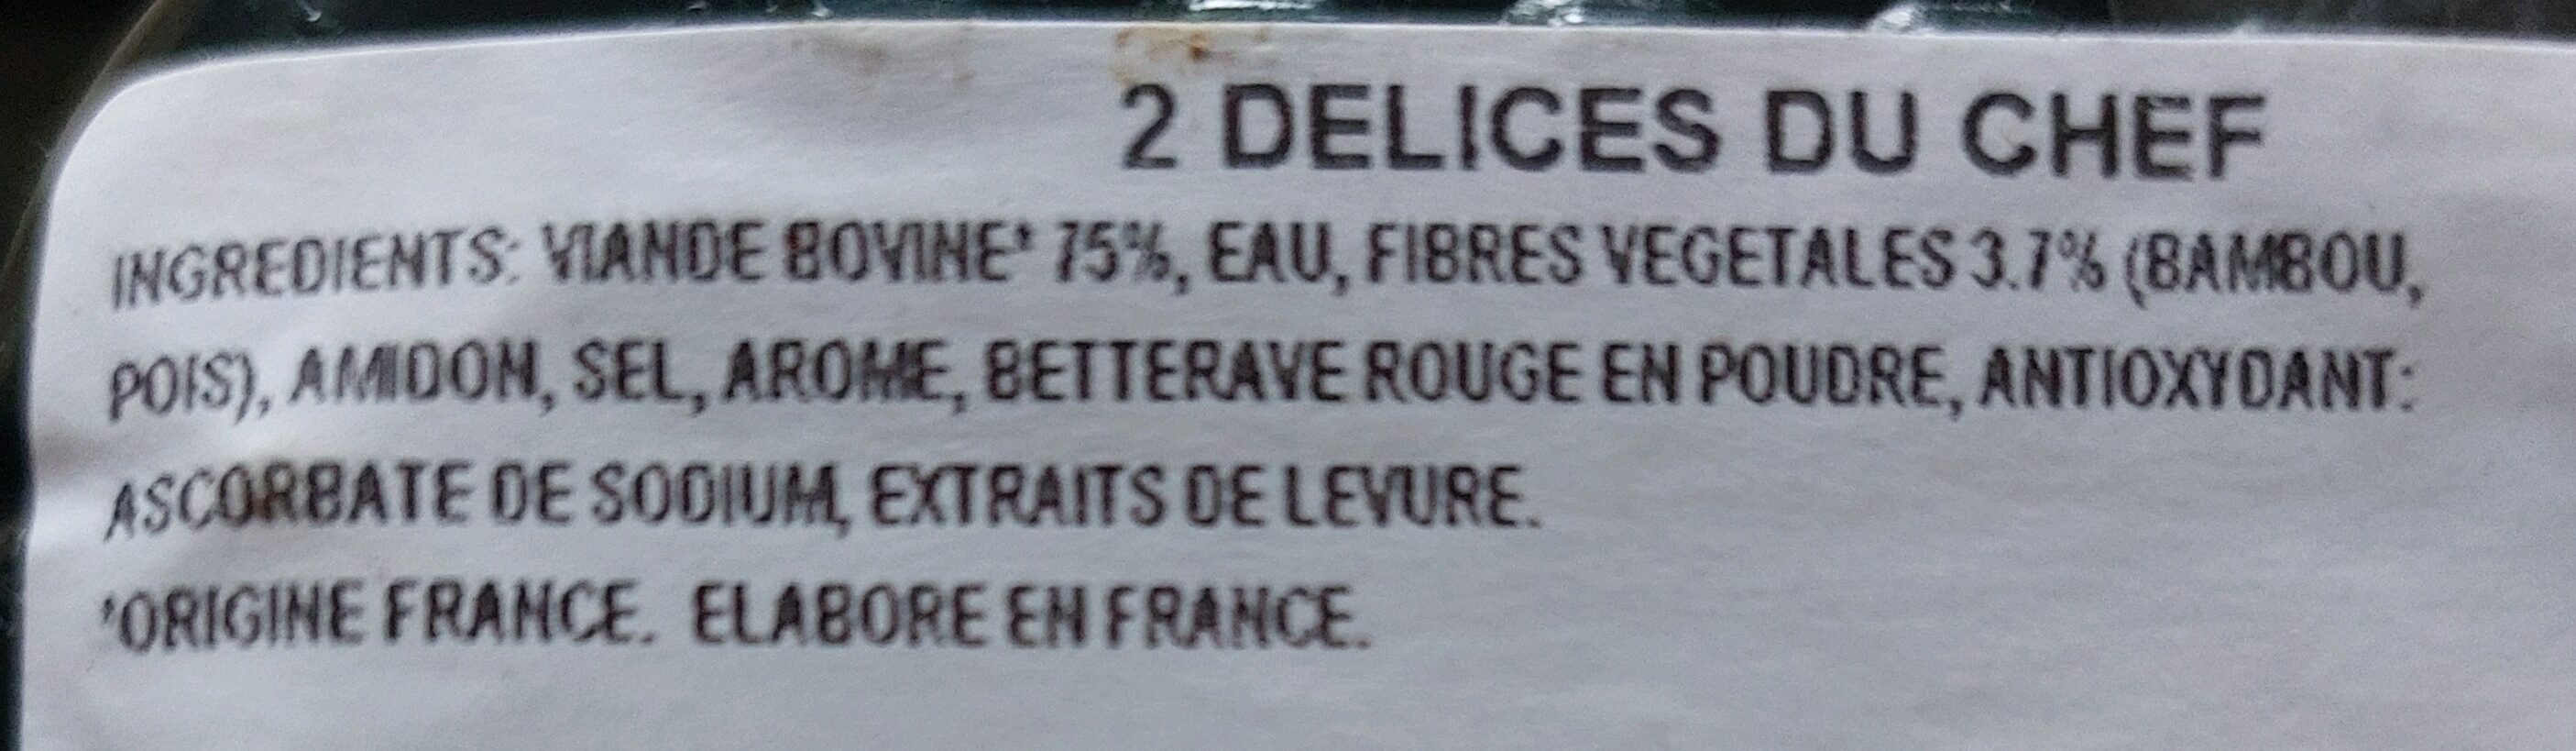 Délice du chef 5% - Ingredients - fr